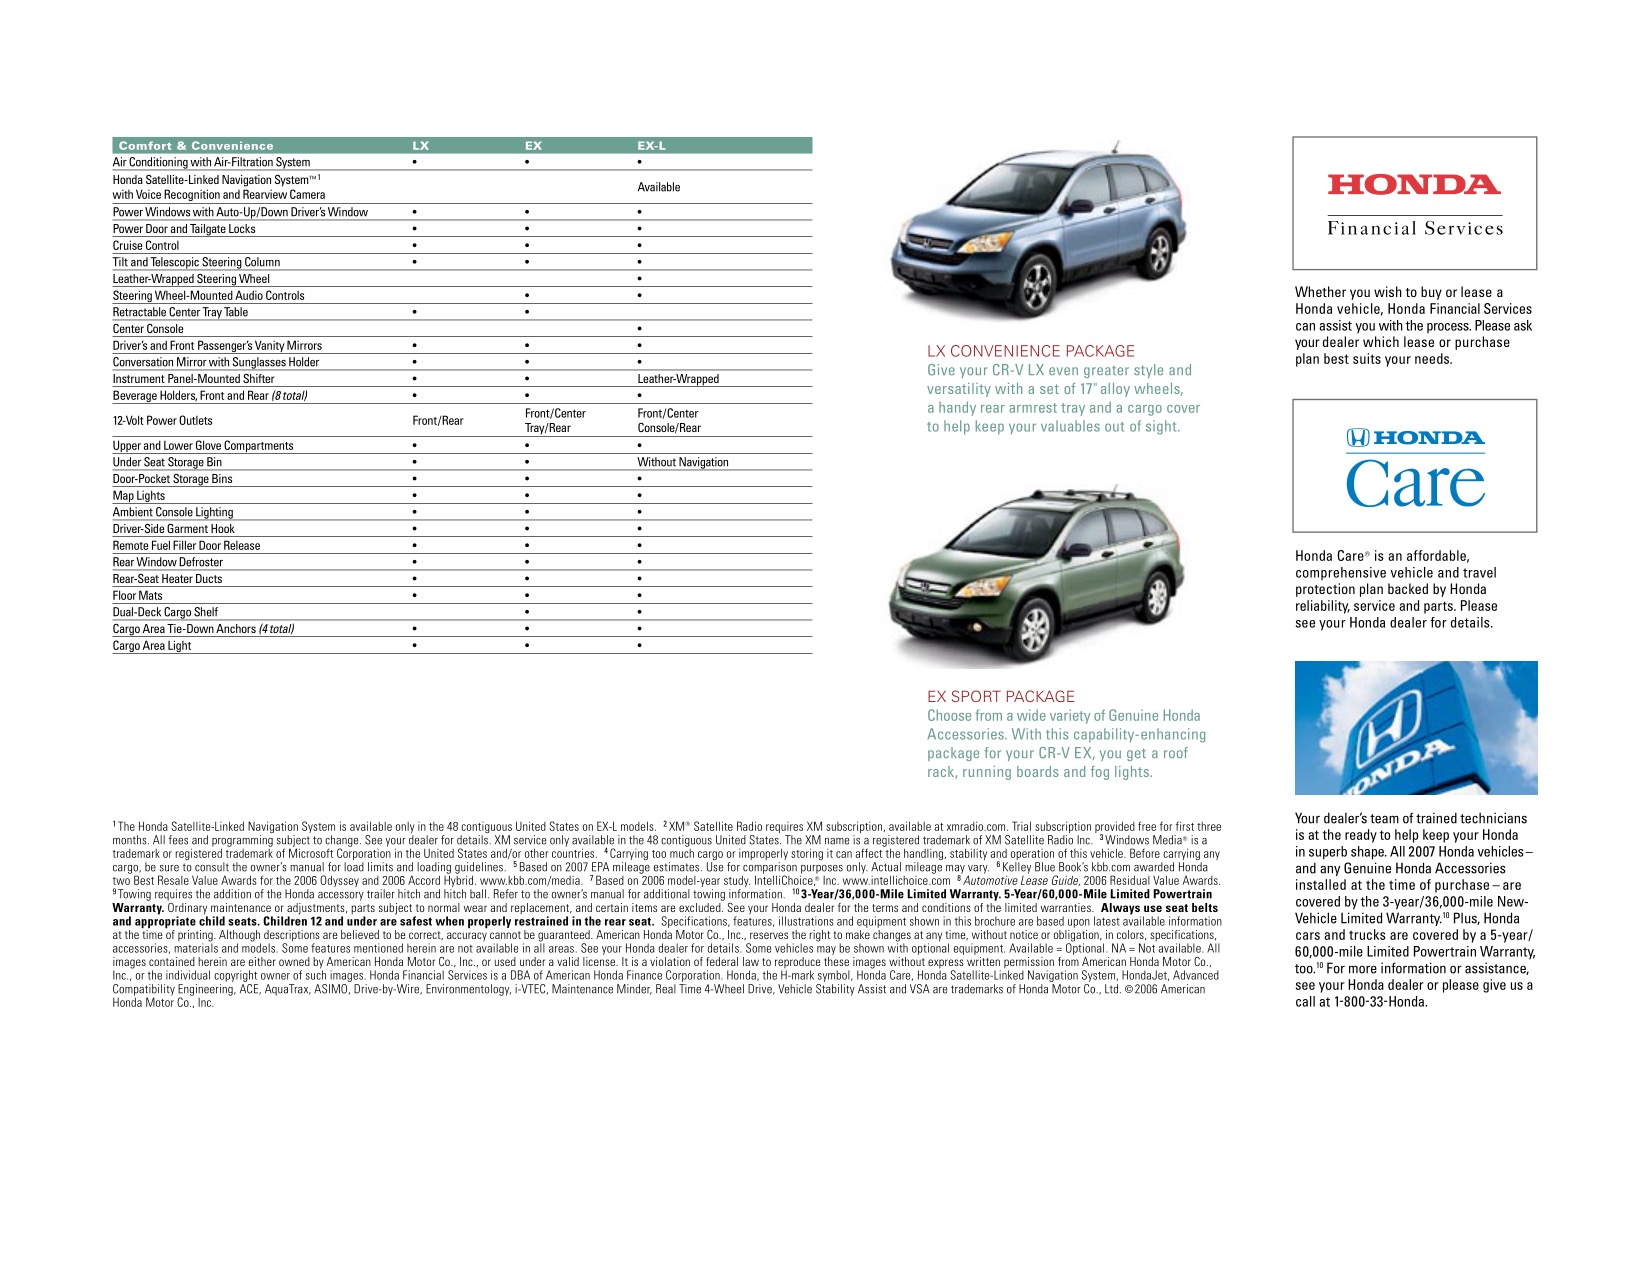 2007 Honda CR-V Brochure Page 2